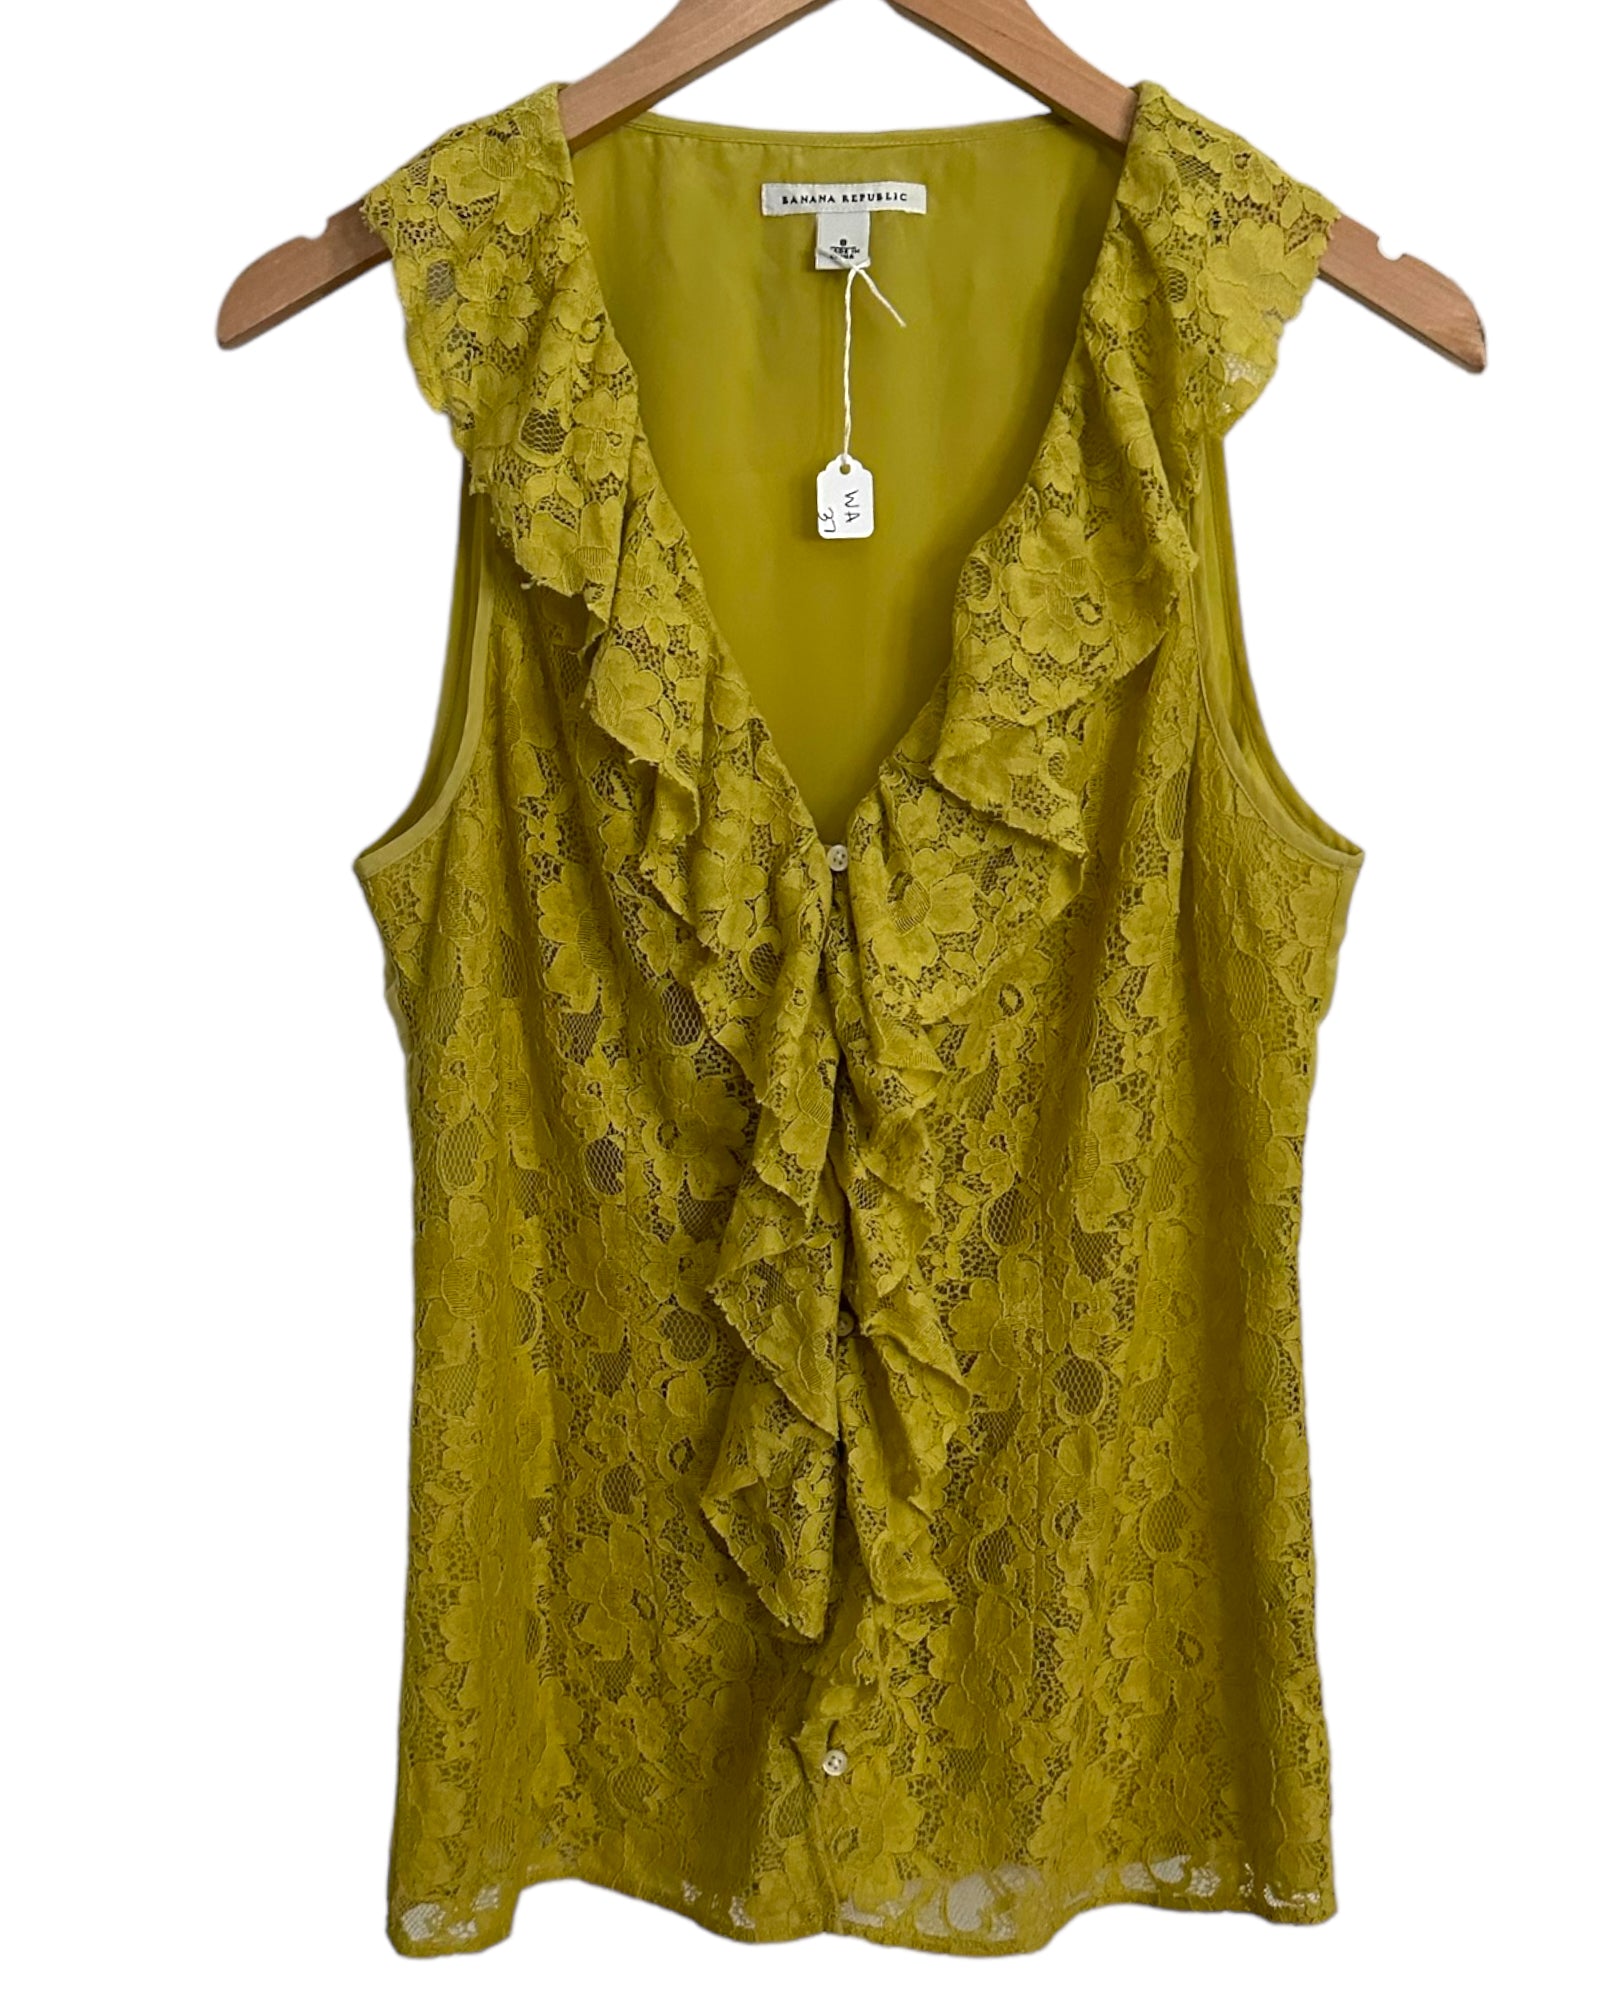 Warm Autumn BANANA REPUBLIC citron yellow lace ruffle sleeveless top